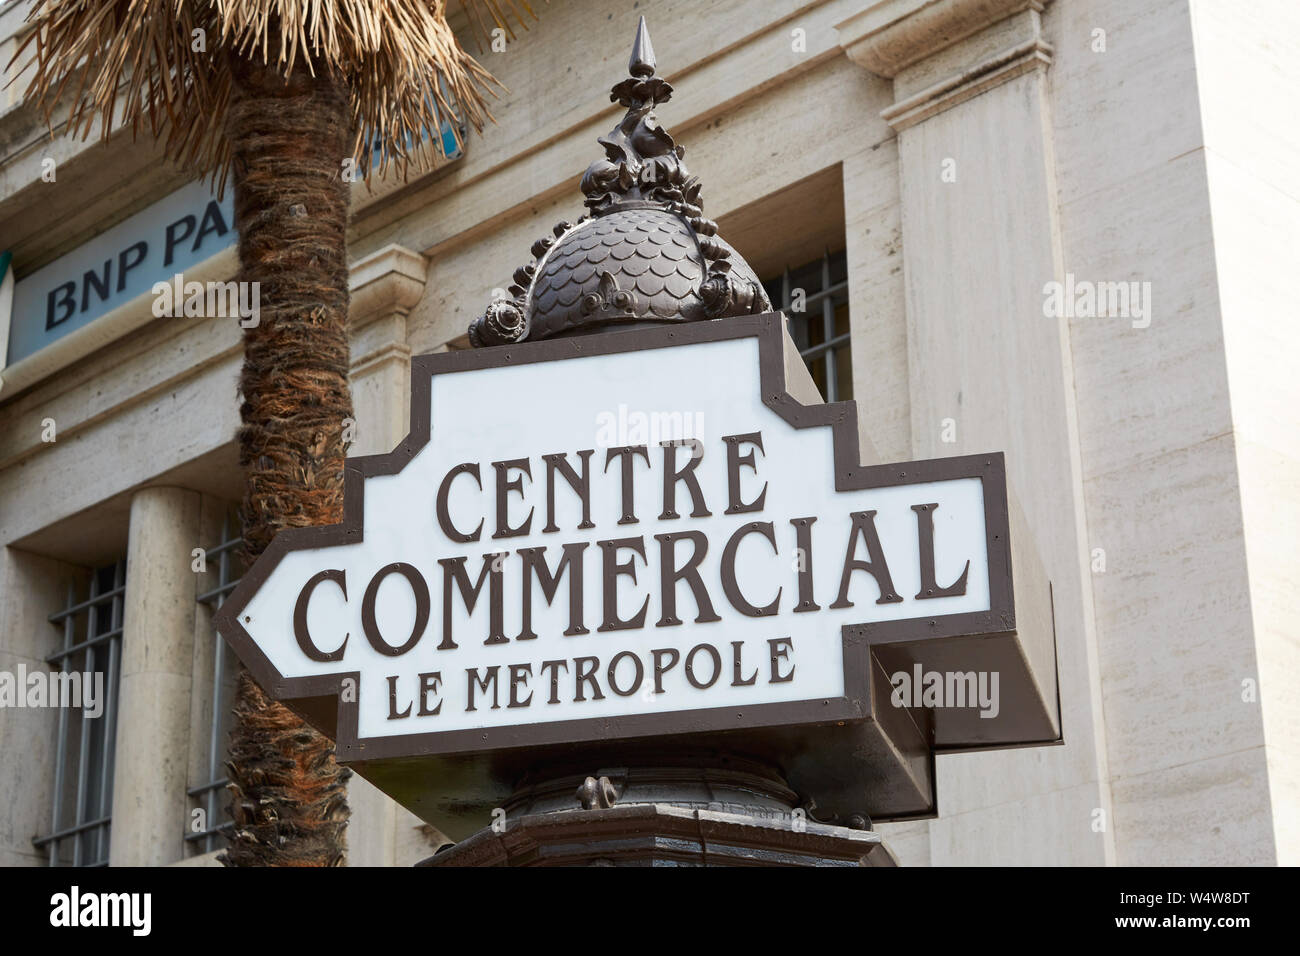 MONTE CARLO, MONACO - AUGUST 20, 2016: Le Metropole, luxury shopping center ancient sign in Monte Carlo, Monaco. Stock Photo